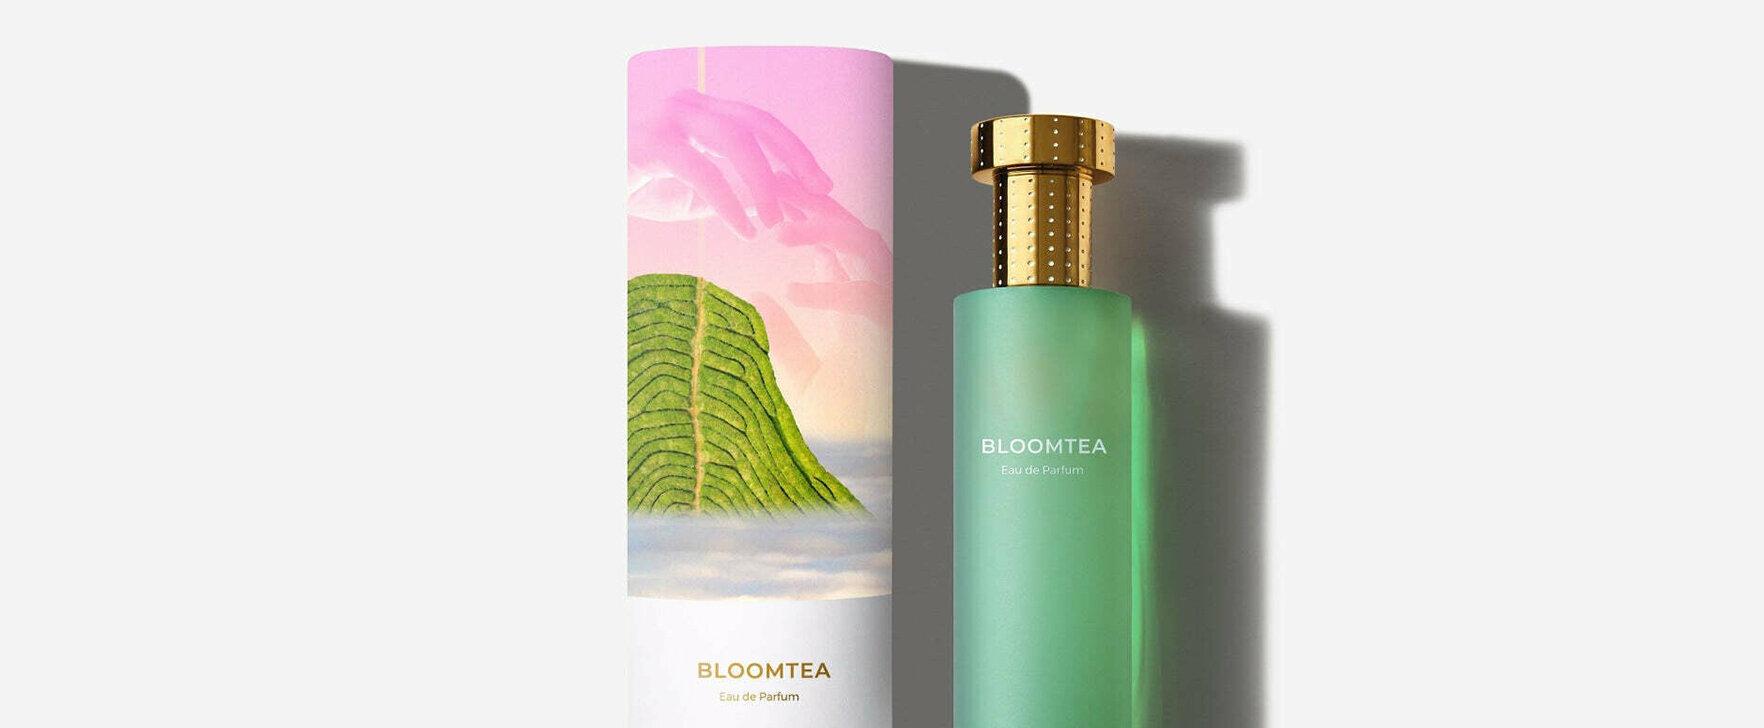 A Fragrance Journey Through Spring: The New Bloomtea Eau de Parfum From Hermetica